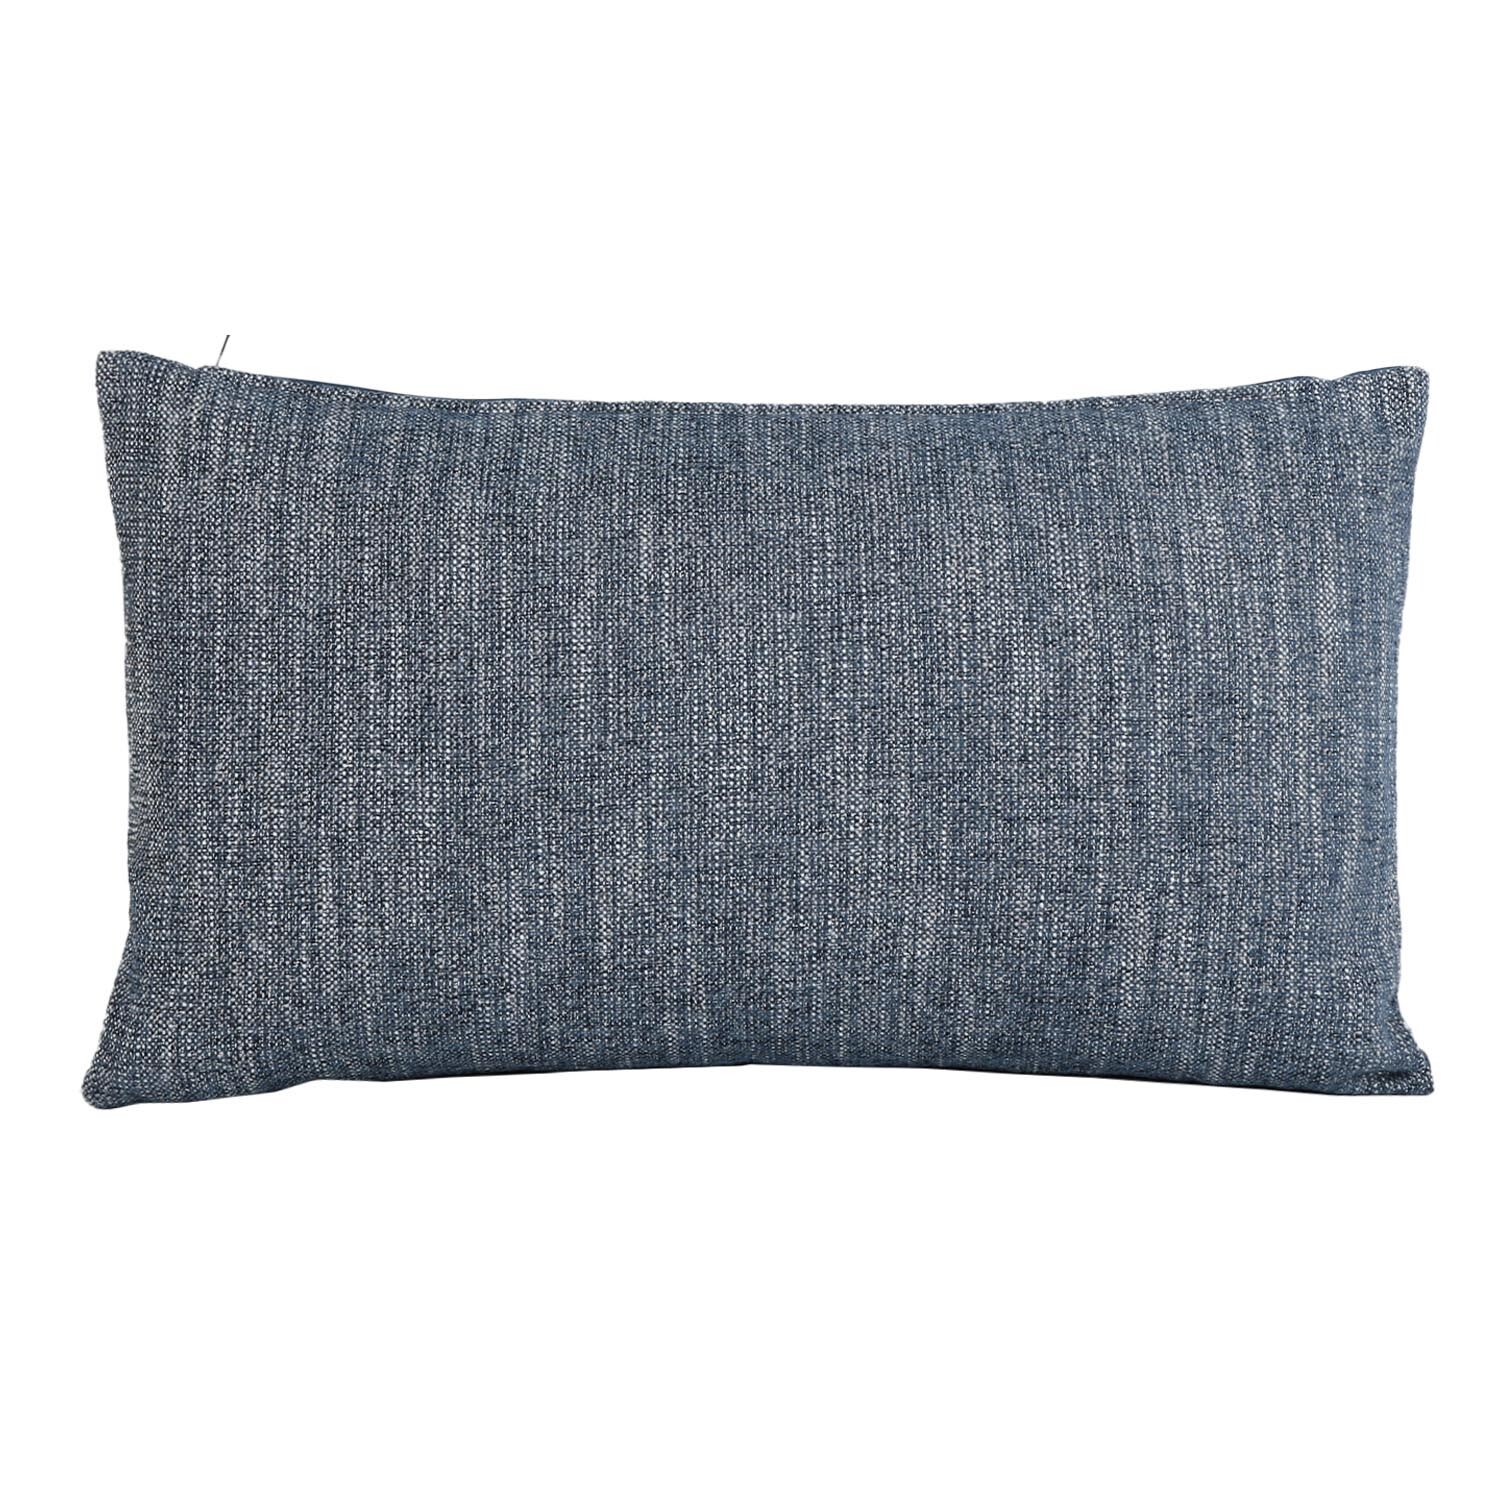 Amberley Metallic Cushion - Denim Image